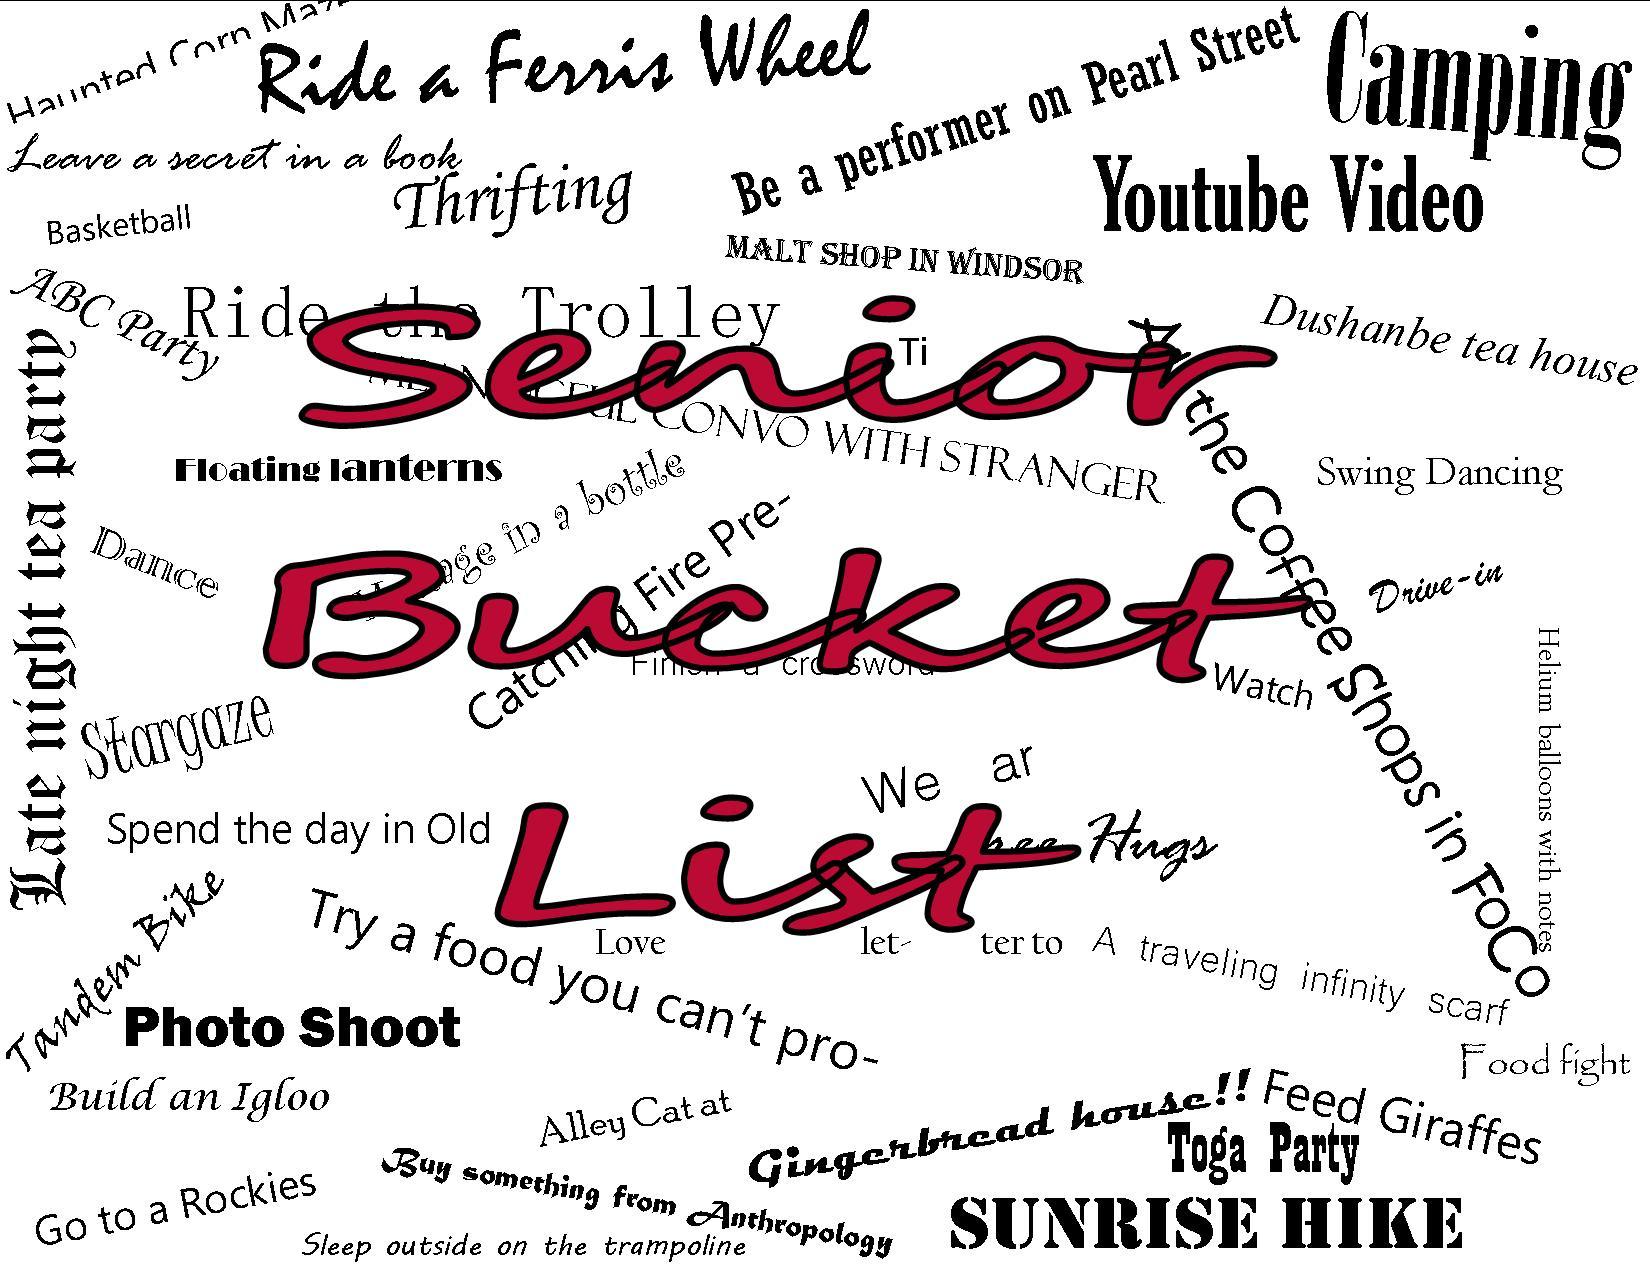 Senior bucket list: traffic court encounter